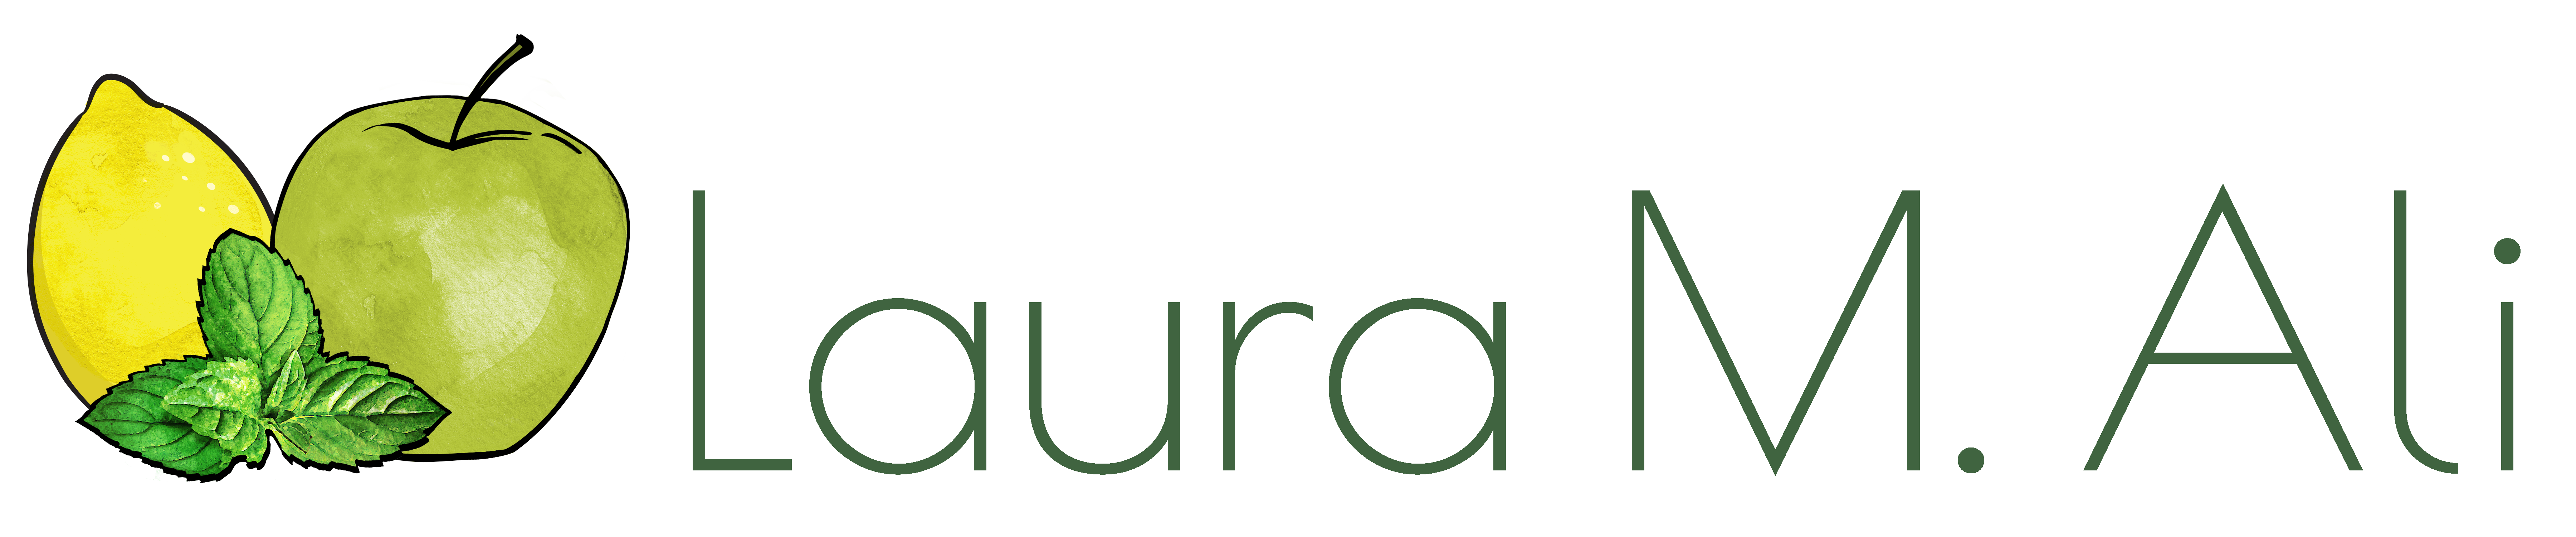 Laura M. Ali logo